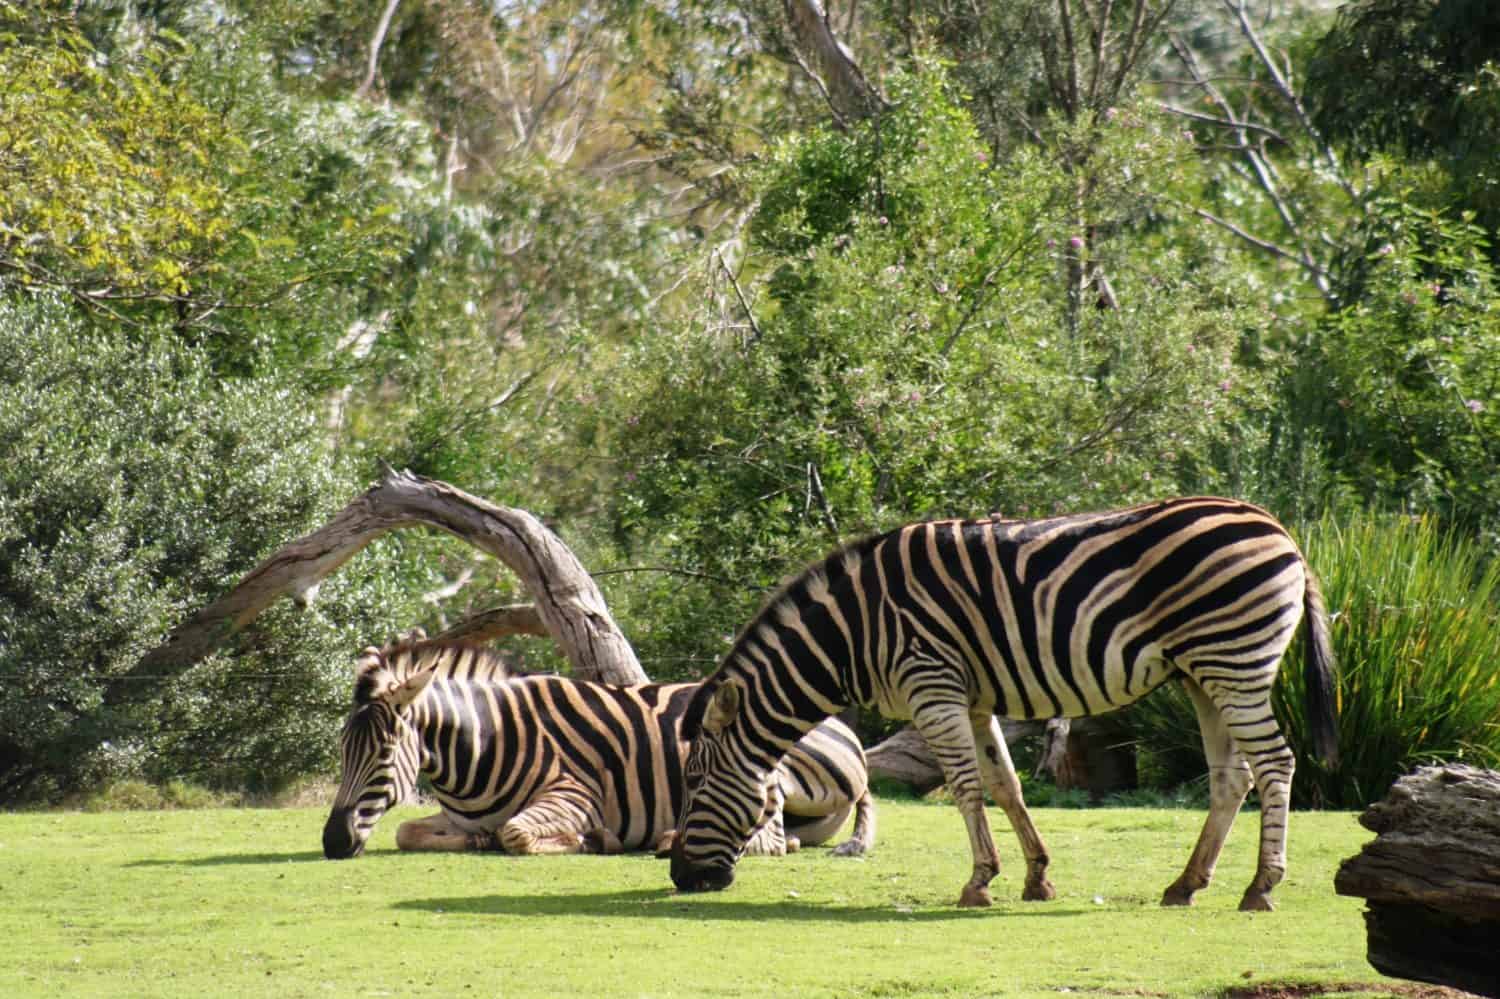 Zebra at Werribee Open Range Zoo Victoria Australia 